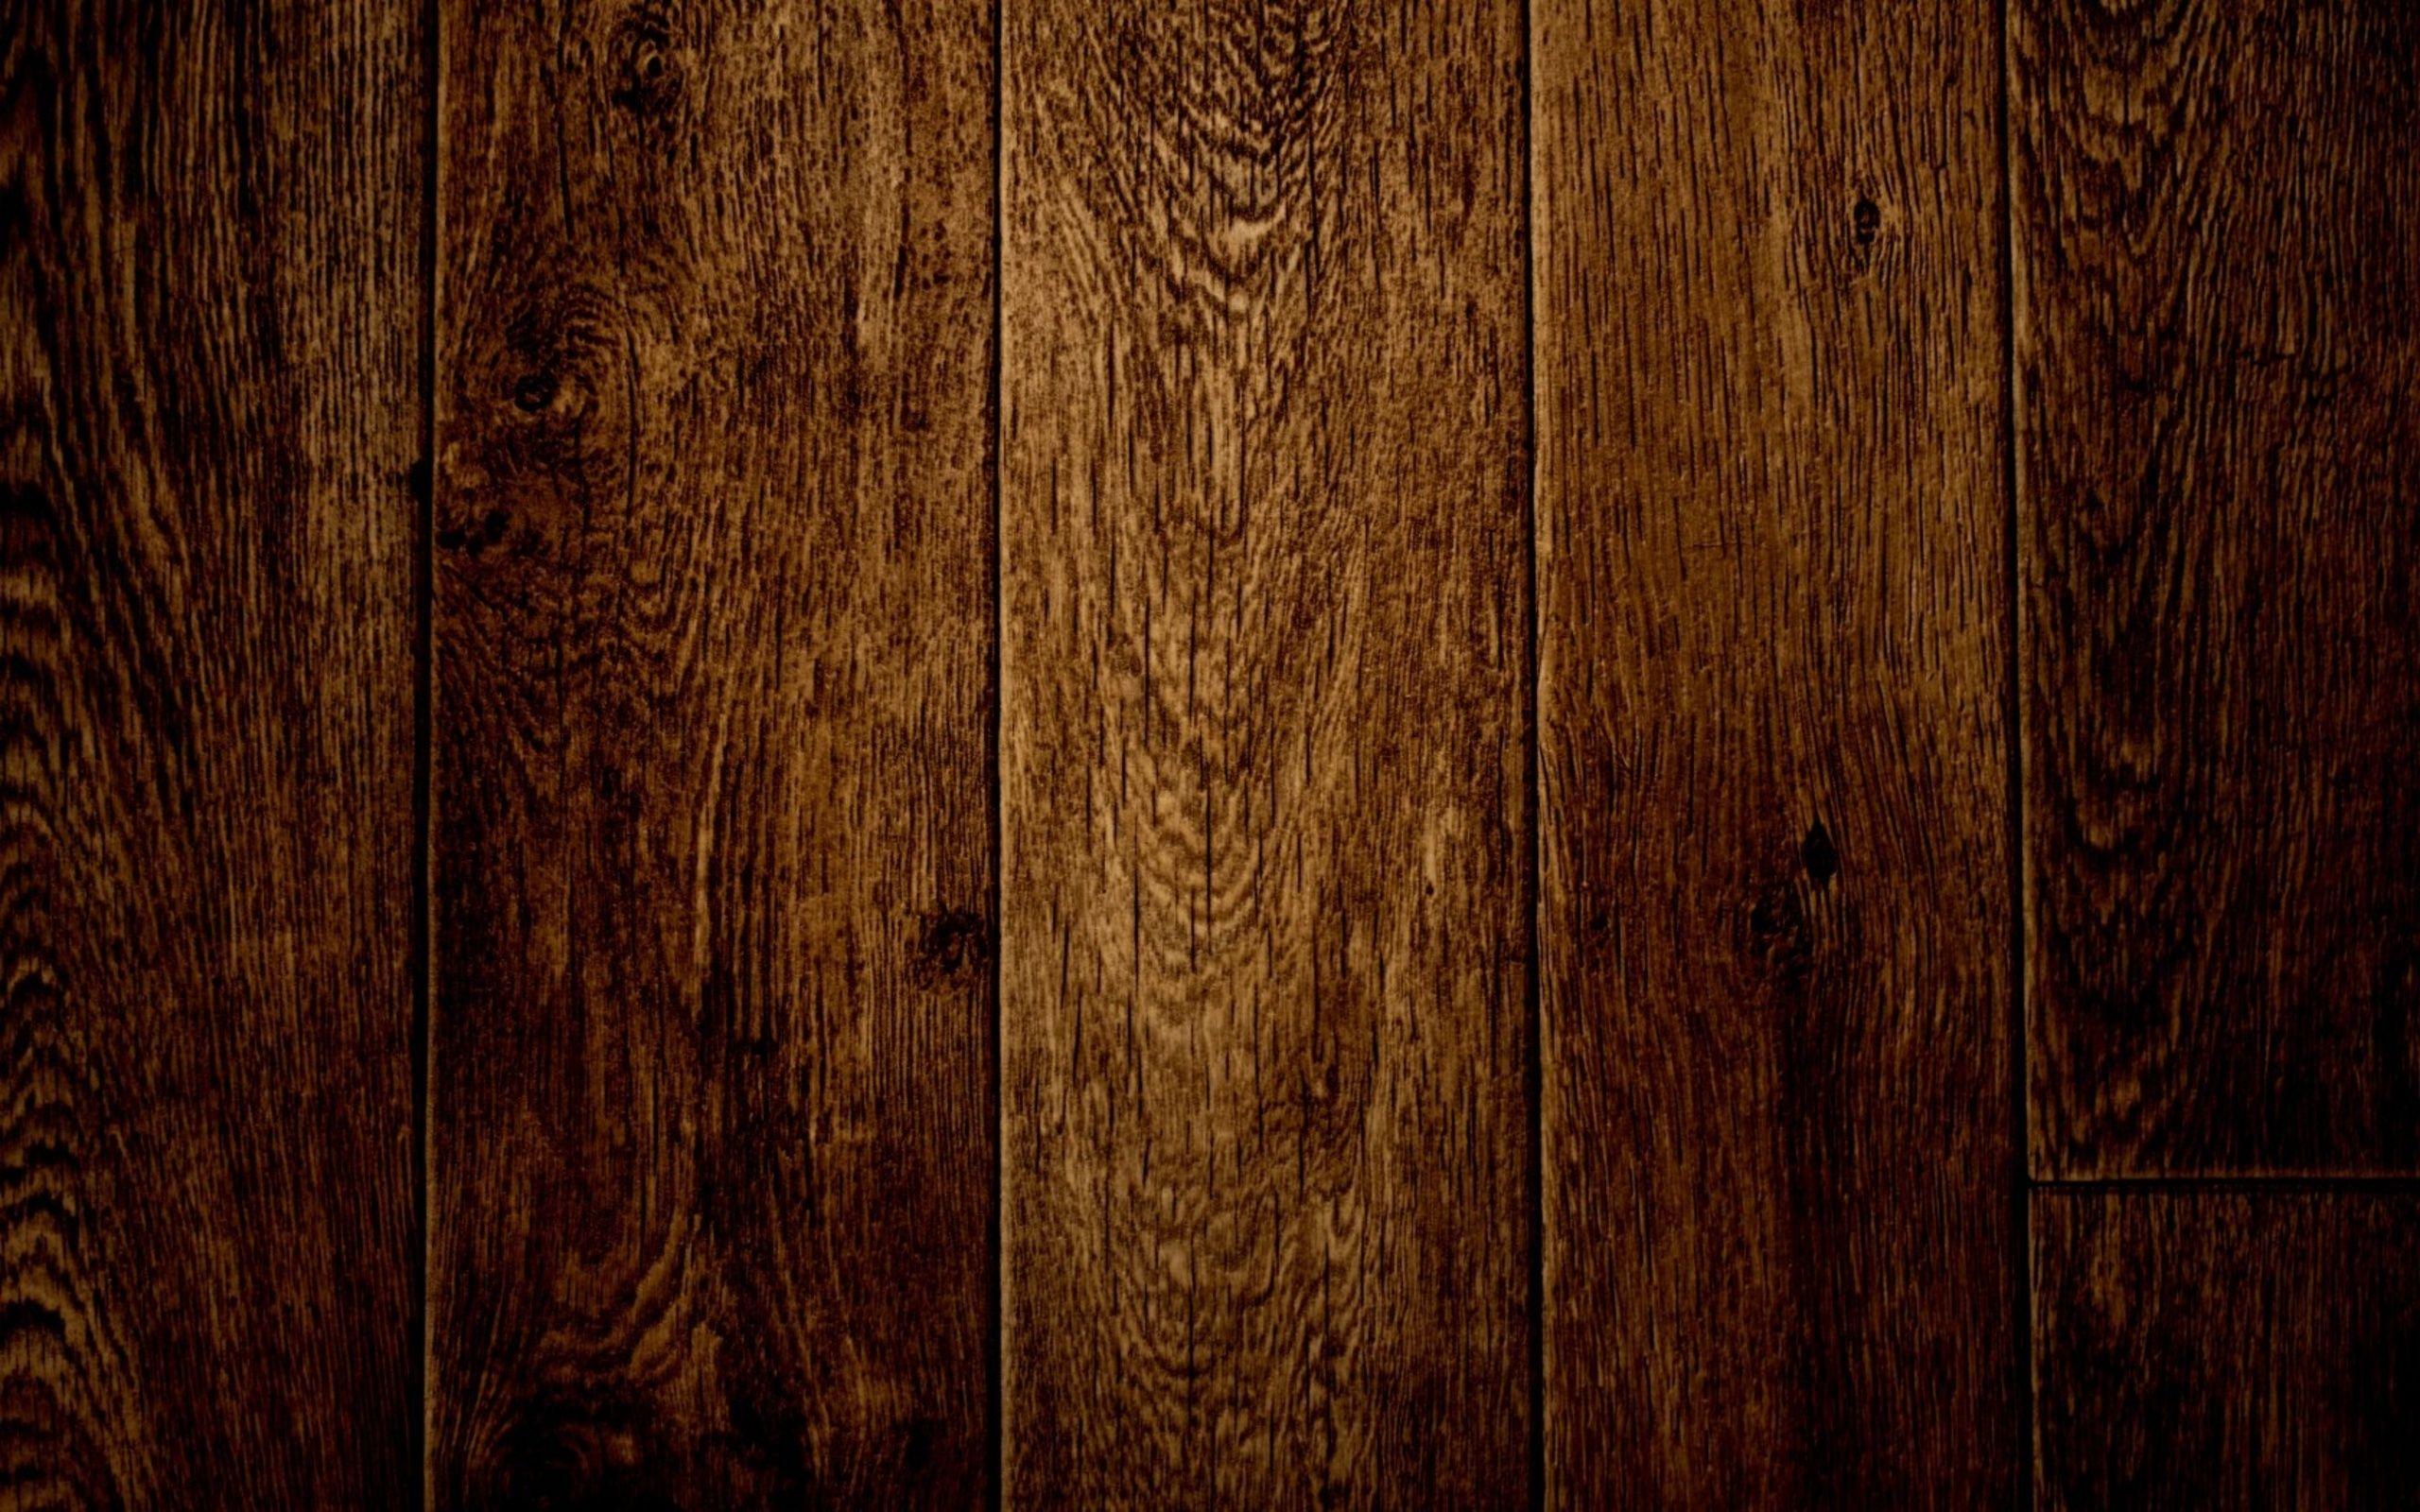 Buy Dimoon Wood Wallpaper Brown Dark Wood Contact Paper Brown Wood Plank  Wood Peel and Stick Wallpaper Removable Rustic Wood Grain Self Adhesive  Vintage Distressed Texture Desk Vinyl Roll177 x787 Online at